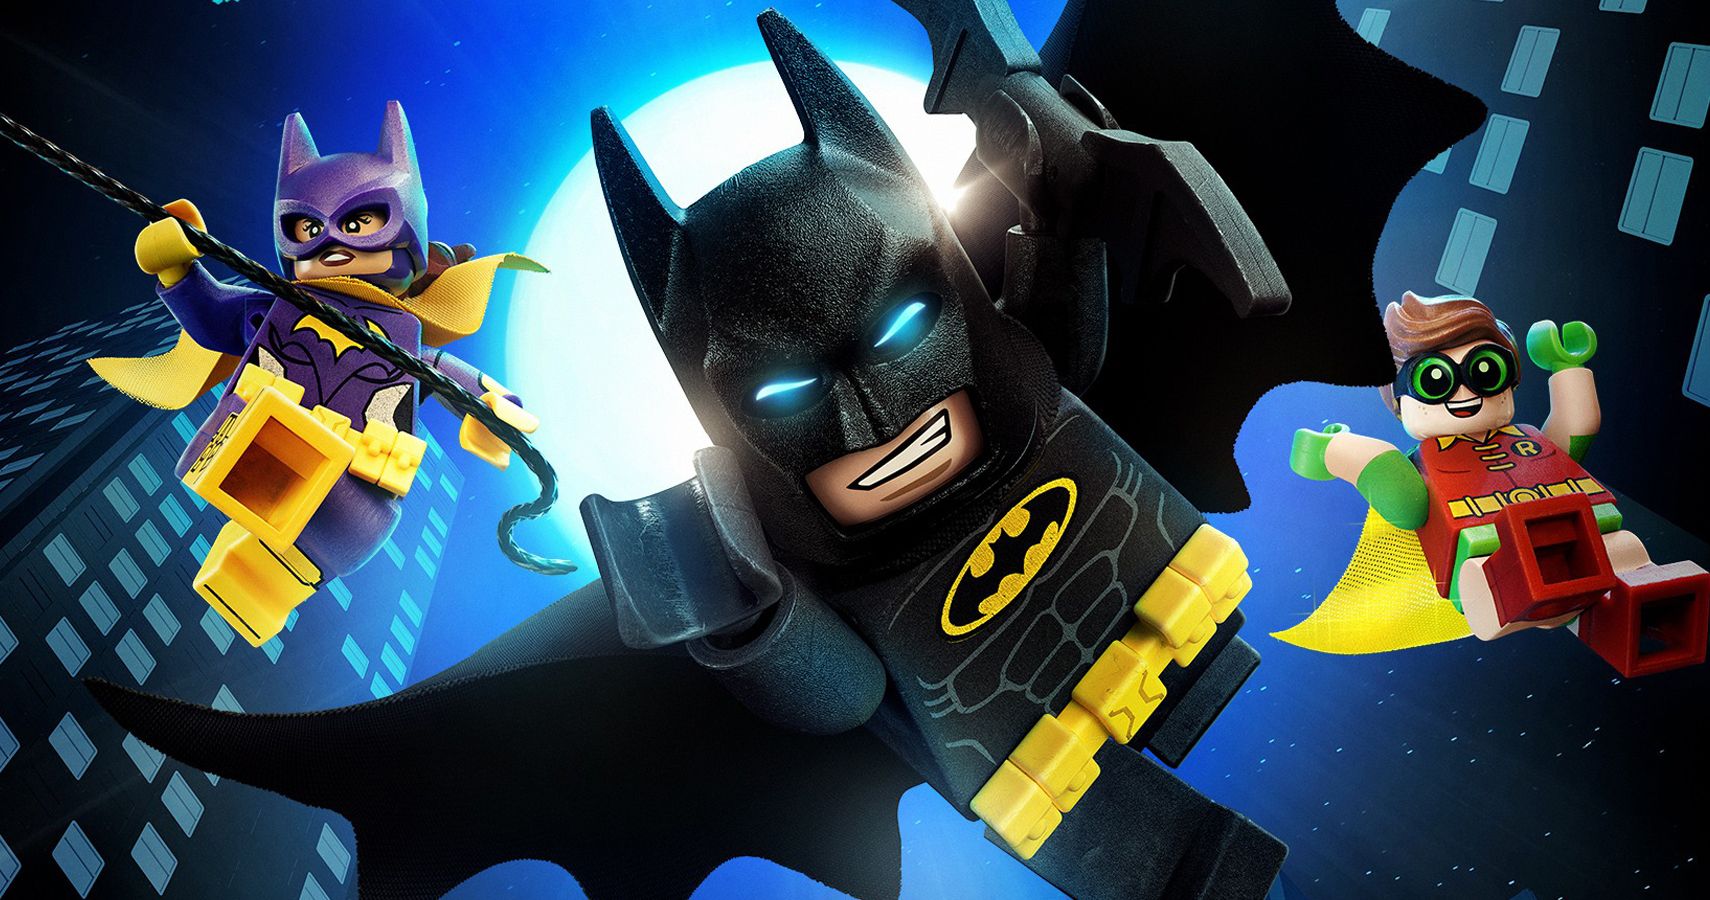 5 Years Later: The Lego Batman Movie - Leftlion - Nottingham Culture